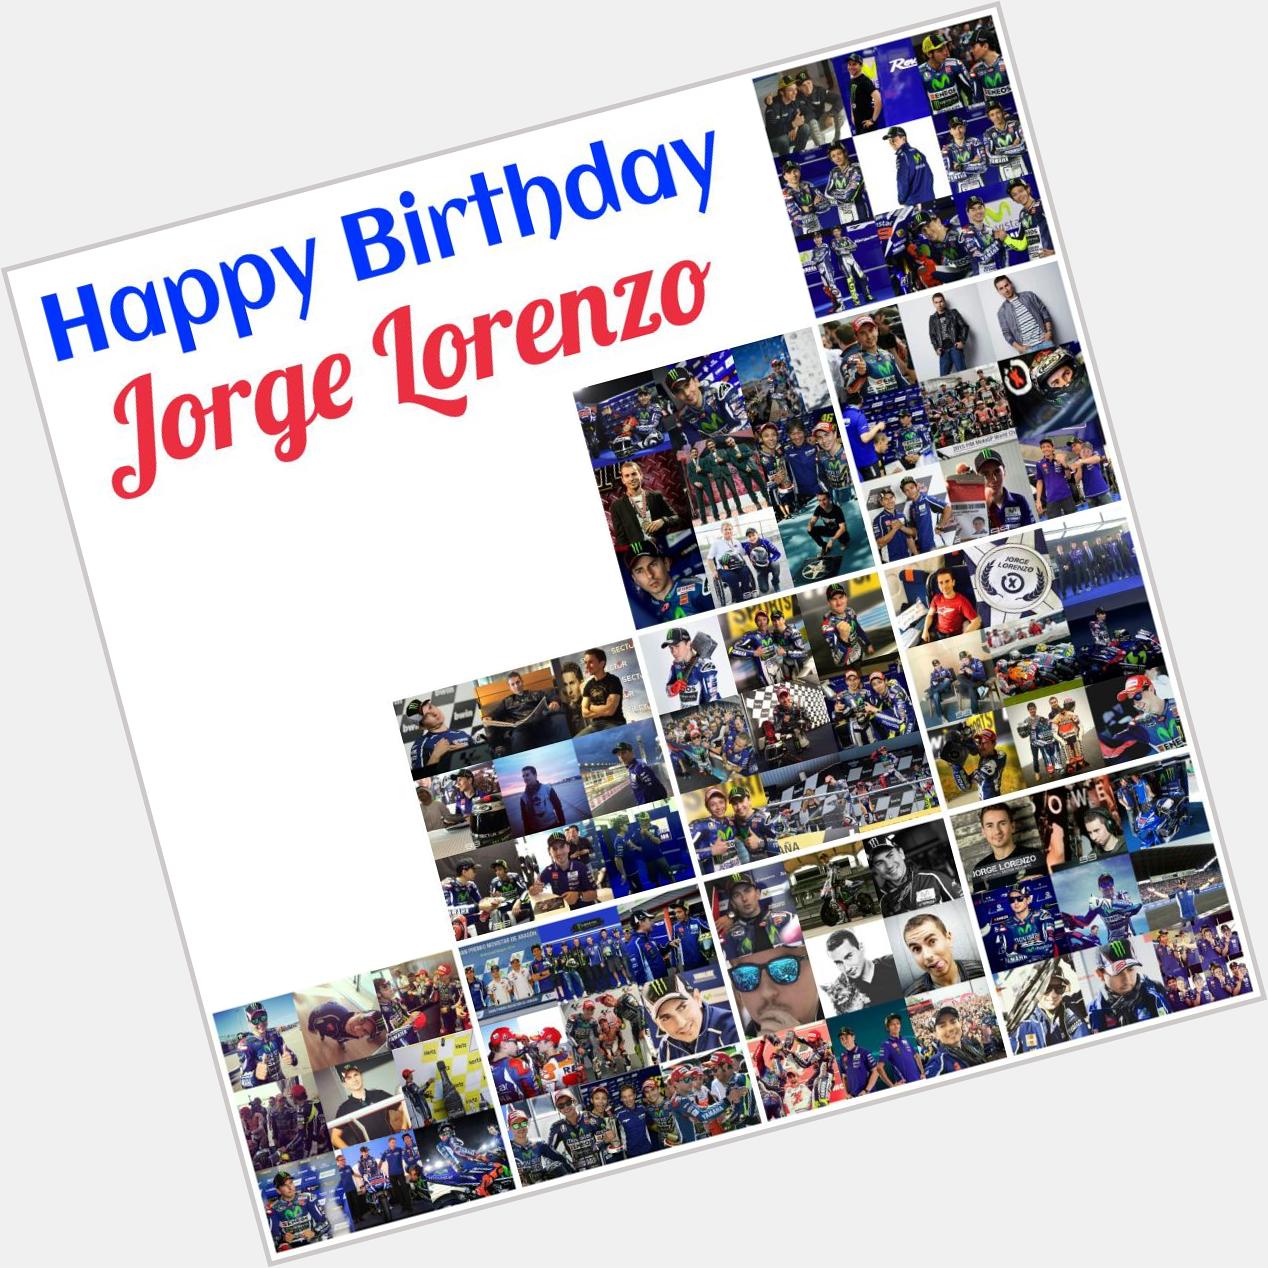   Happy birthday Jorge Lorenzo! /Selamat ulang tahun! Wish you all the best, Jorge!  From Indonesia 